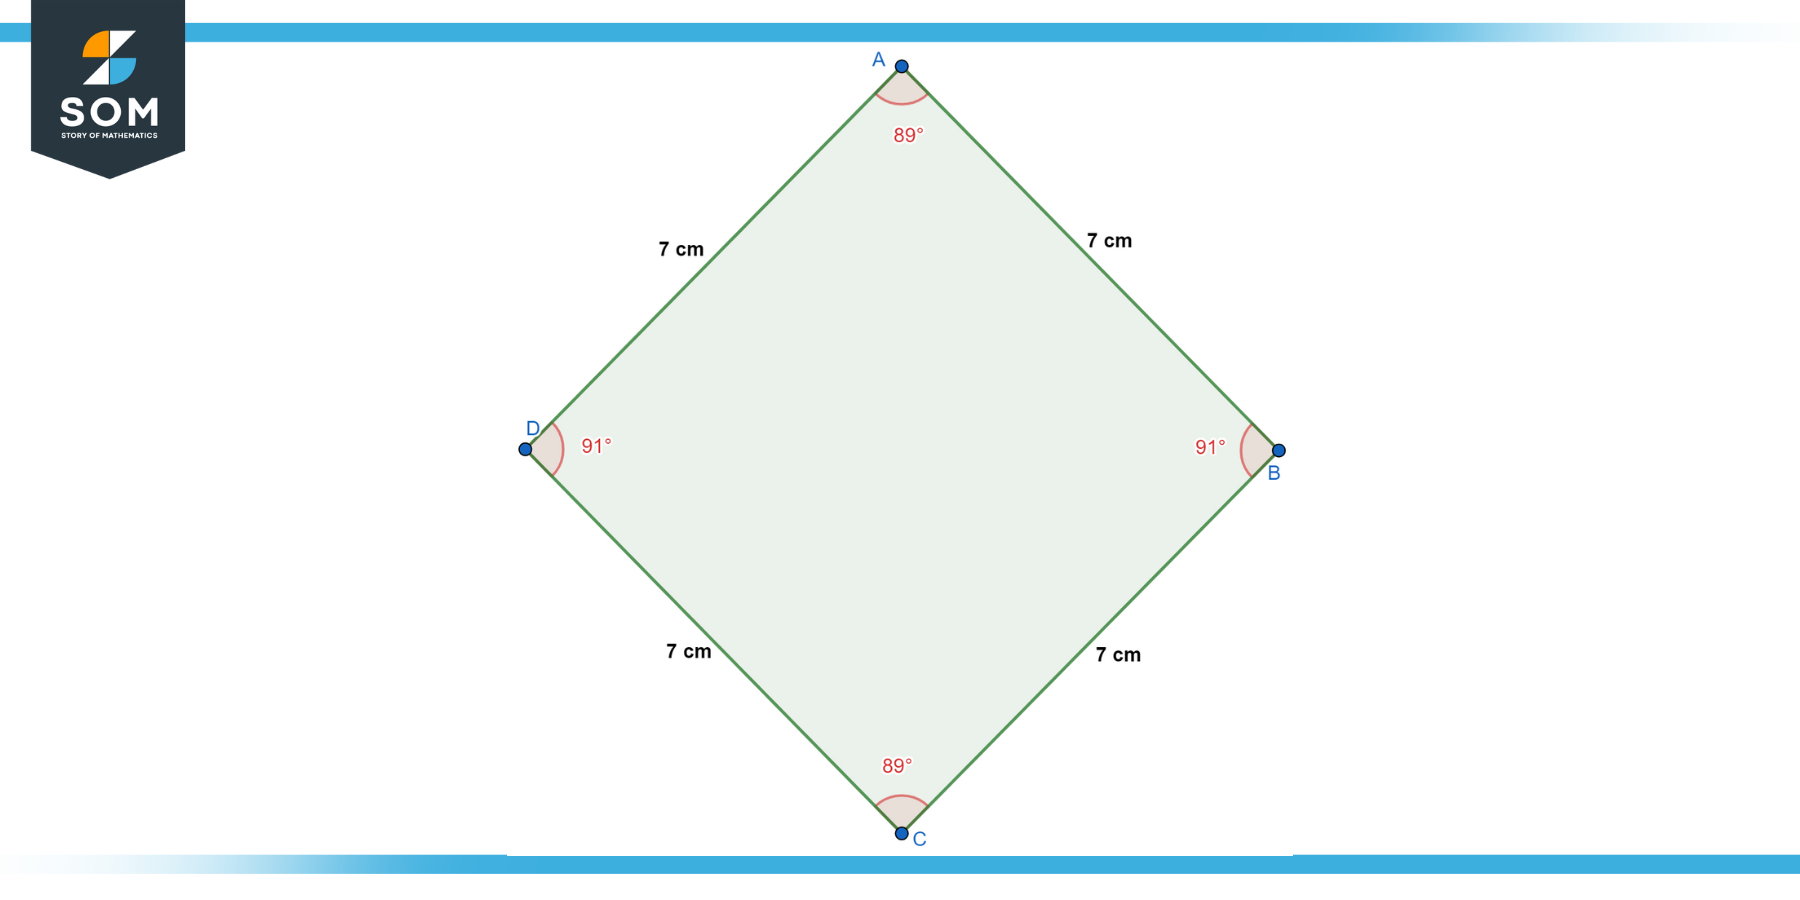 Rhombus ABCD each side 7cm